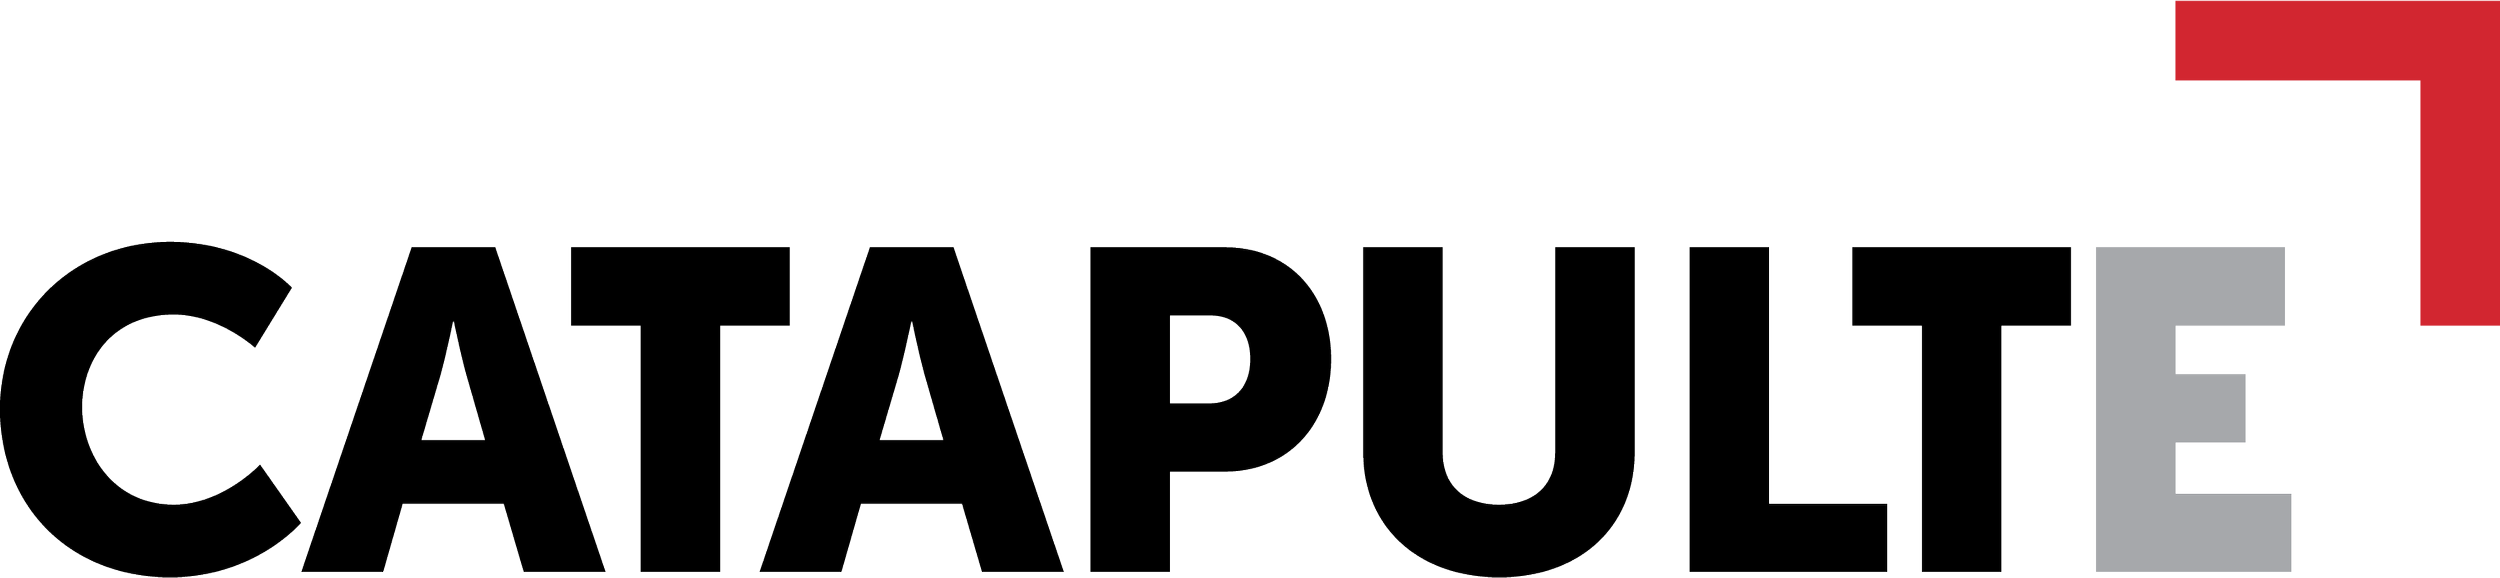 Catapult_logo_POS_4C.png